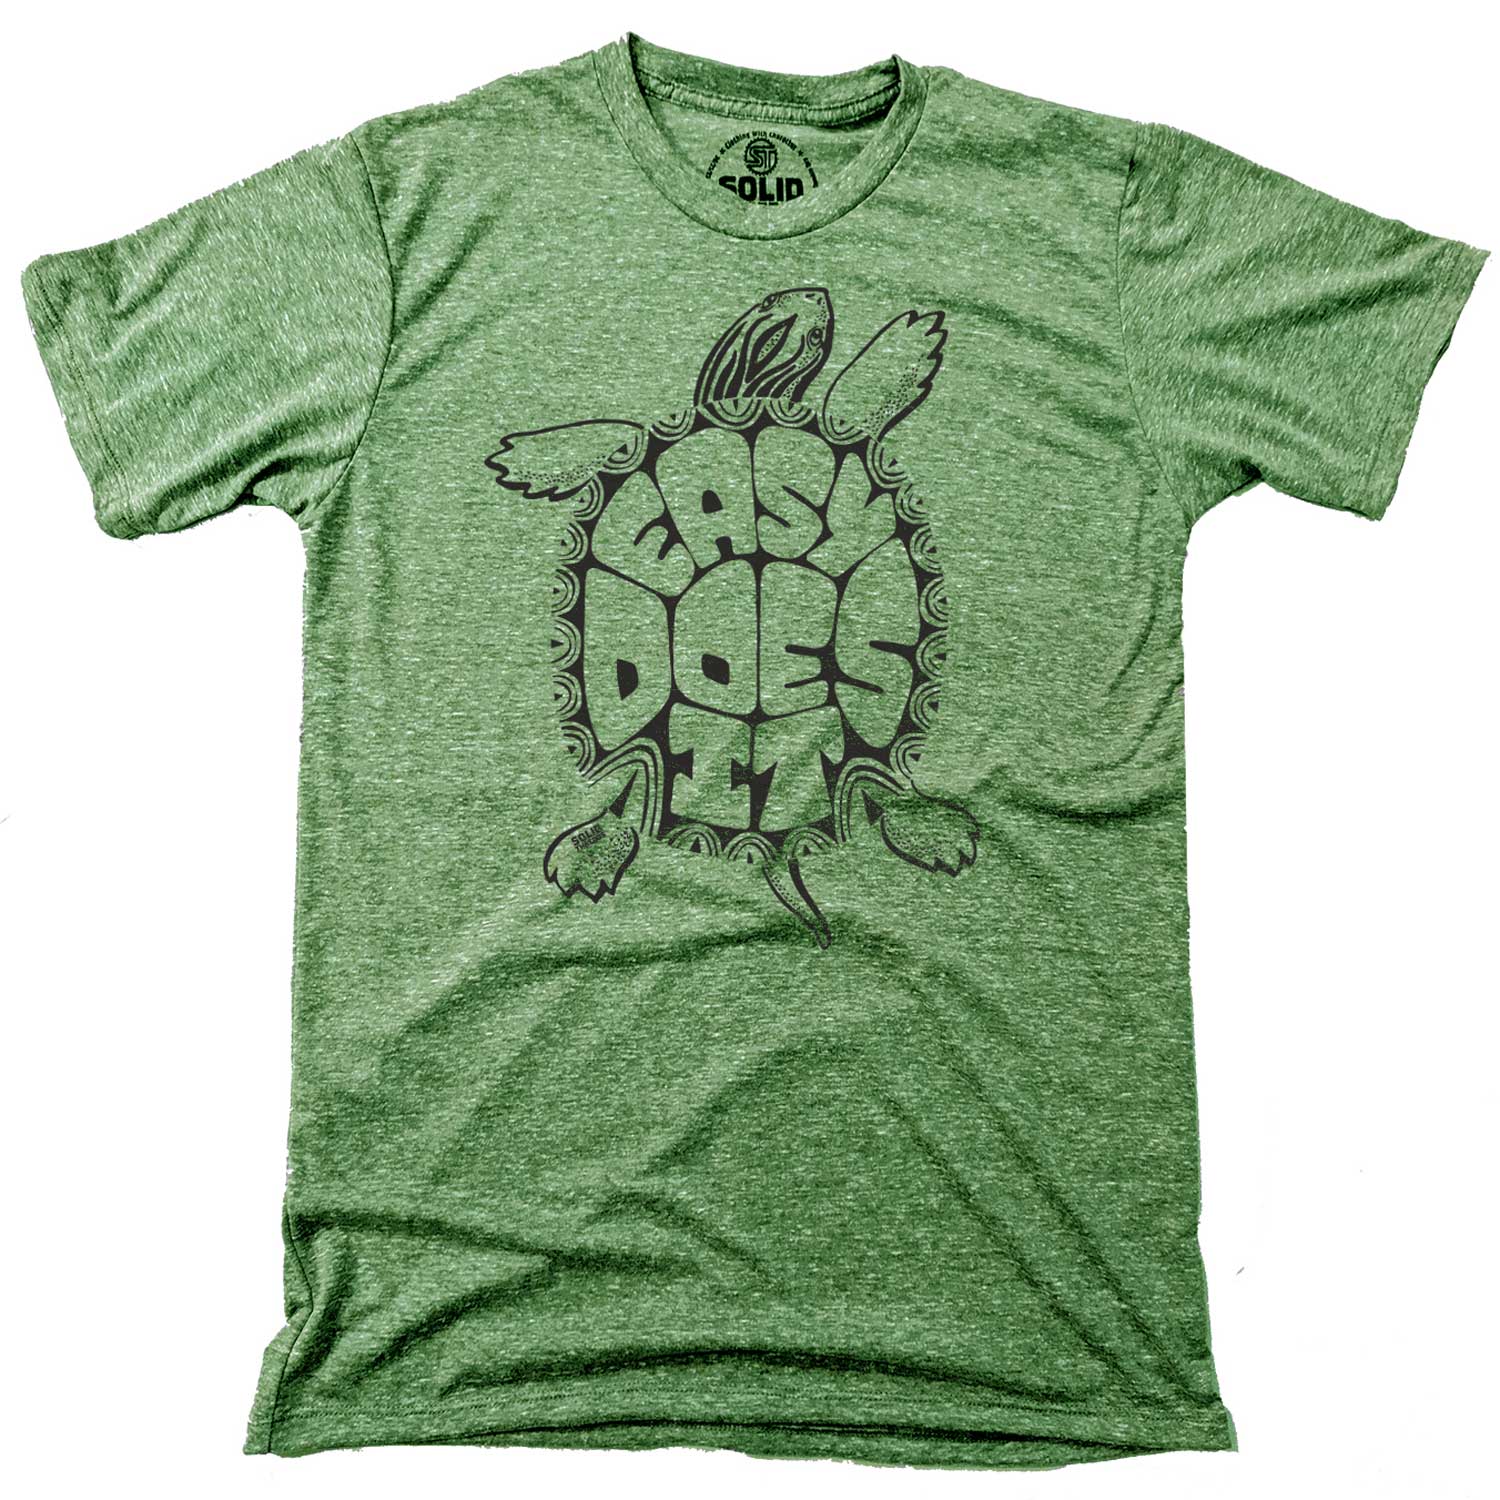 Save The Turtles Shirt, Turtle Lover Shirt, Sea Turtles Shirt, Save The Ocean Shirt, Nature Lover Shirt, Beach Life Shirt, Ocean Lover Shirt